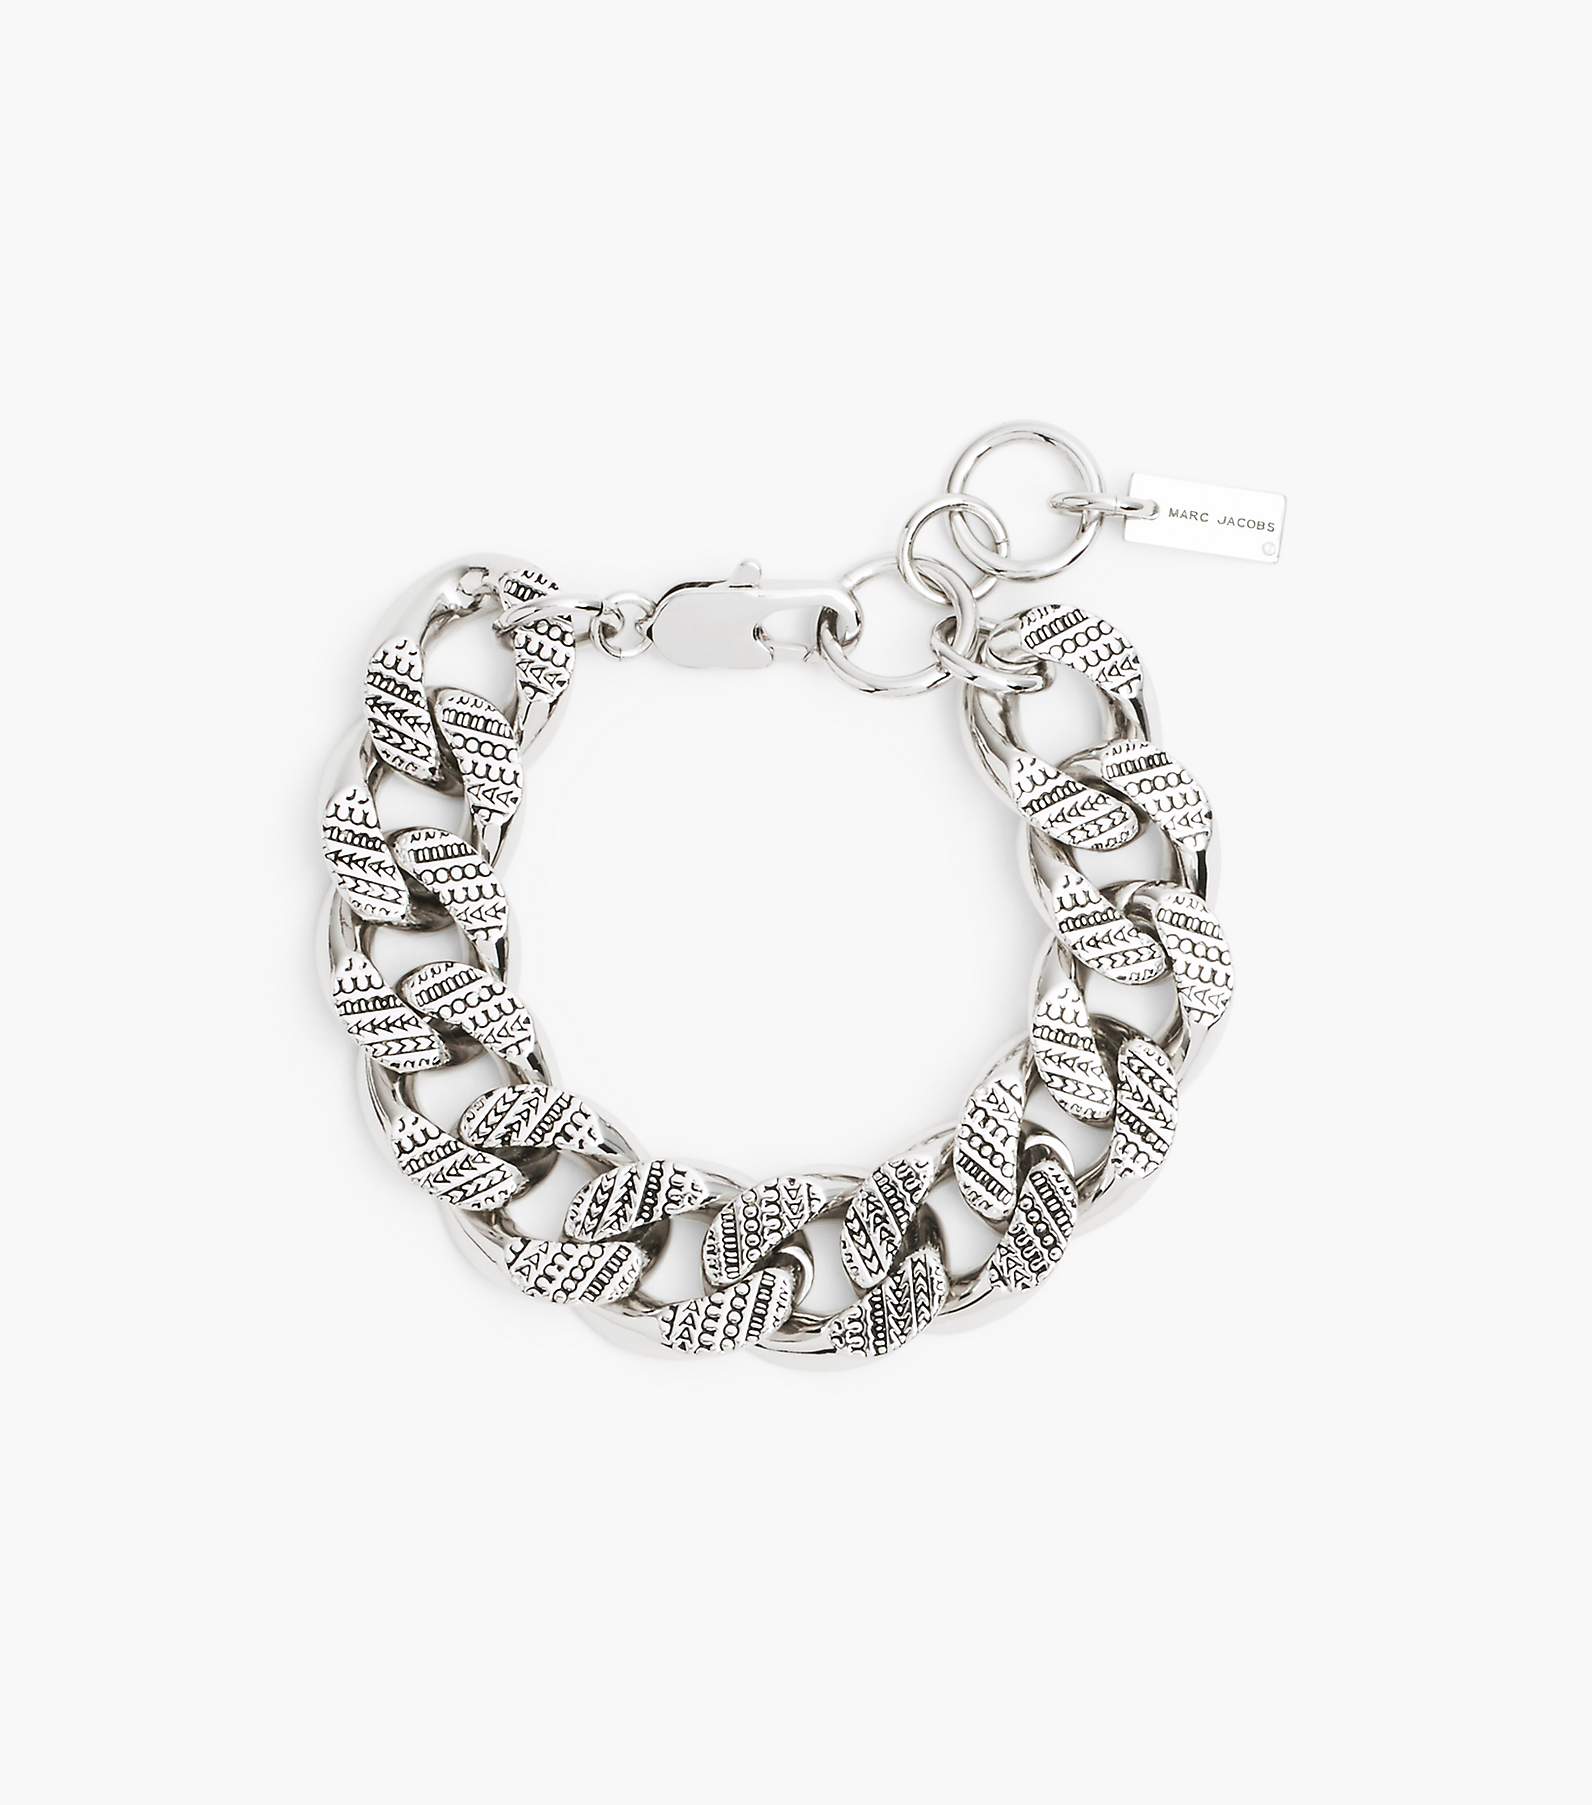 Marc Jacobs Gold 'The Mini Icon Charm' Bracelet